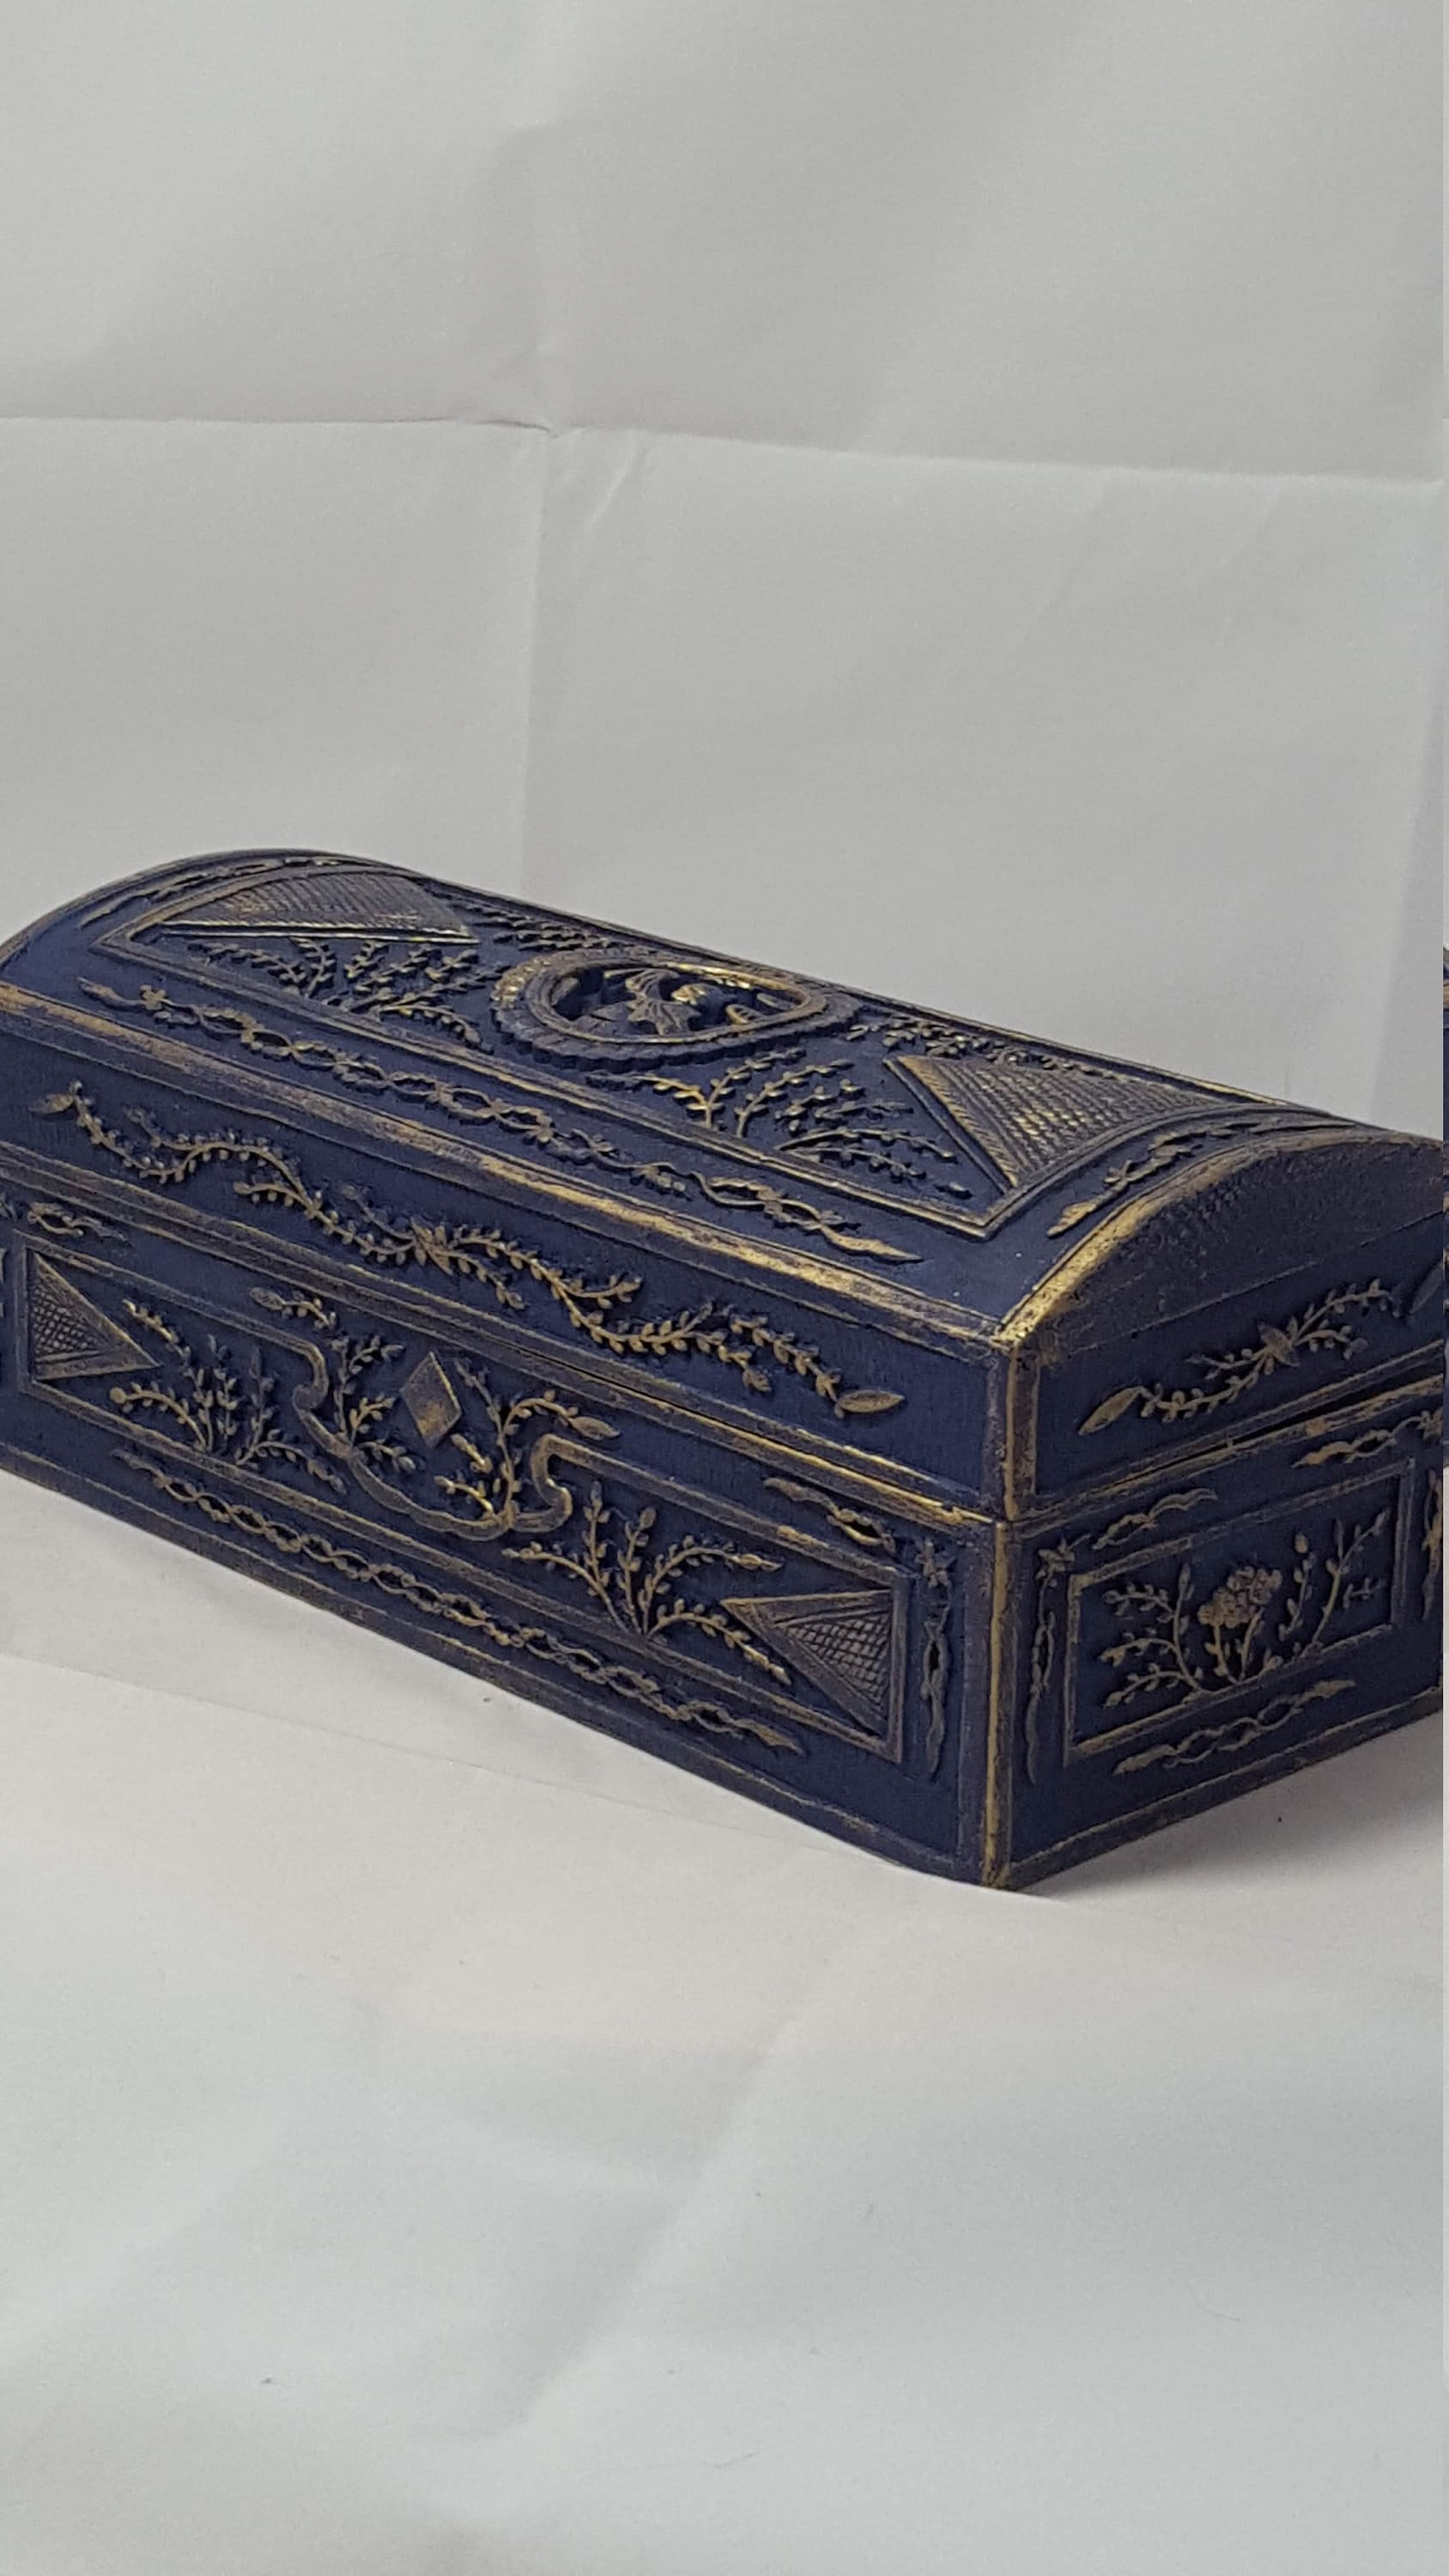 Sewing Box Wooden Box Carved Box Trinket Box Jewelry Box 